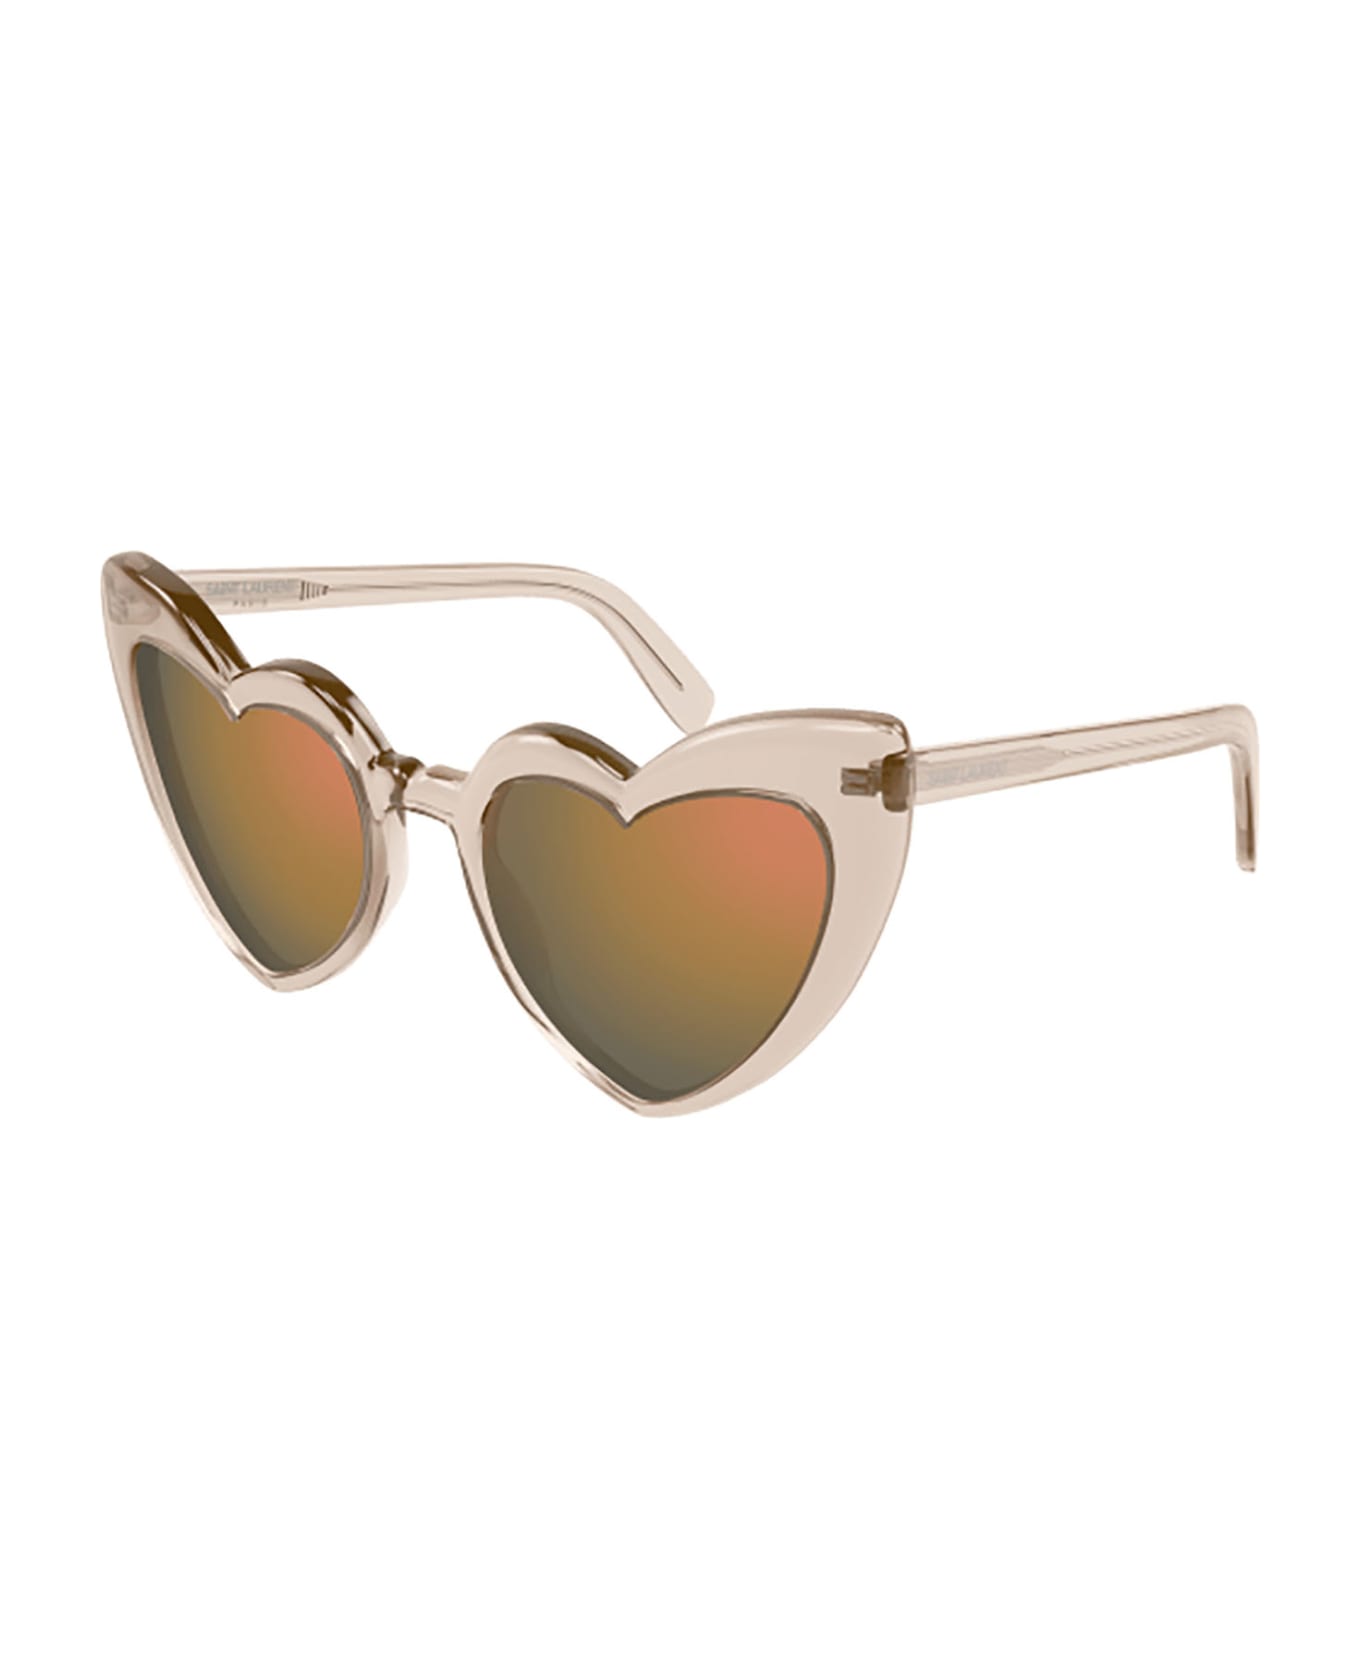 Saint Laurent Eyewear Sl 181 Loulou Sunglasses - 027 nude nude copper